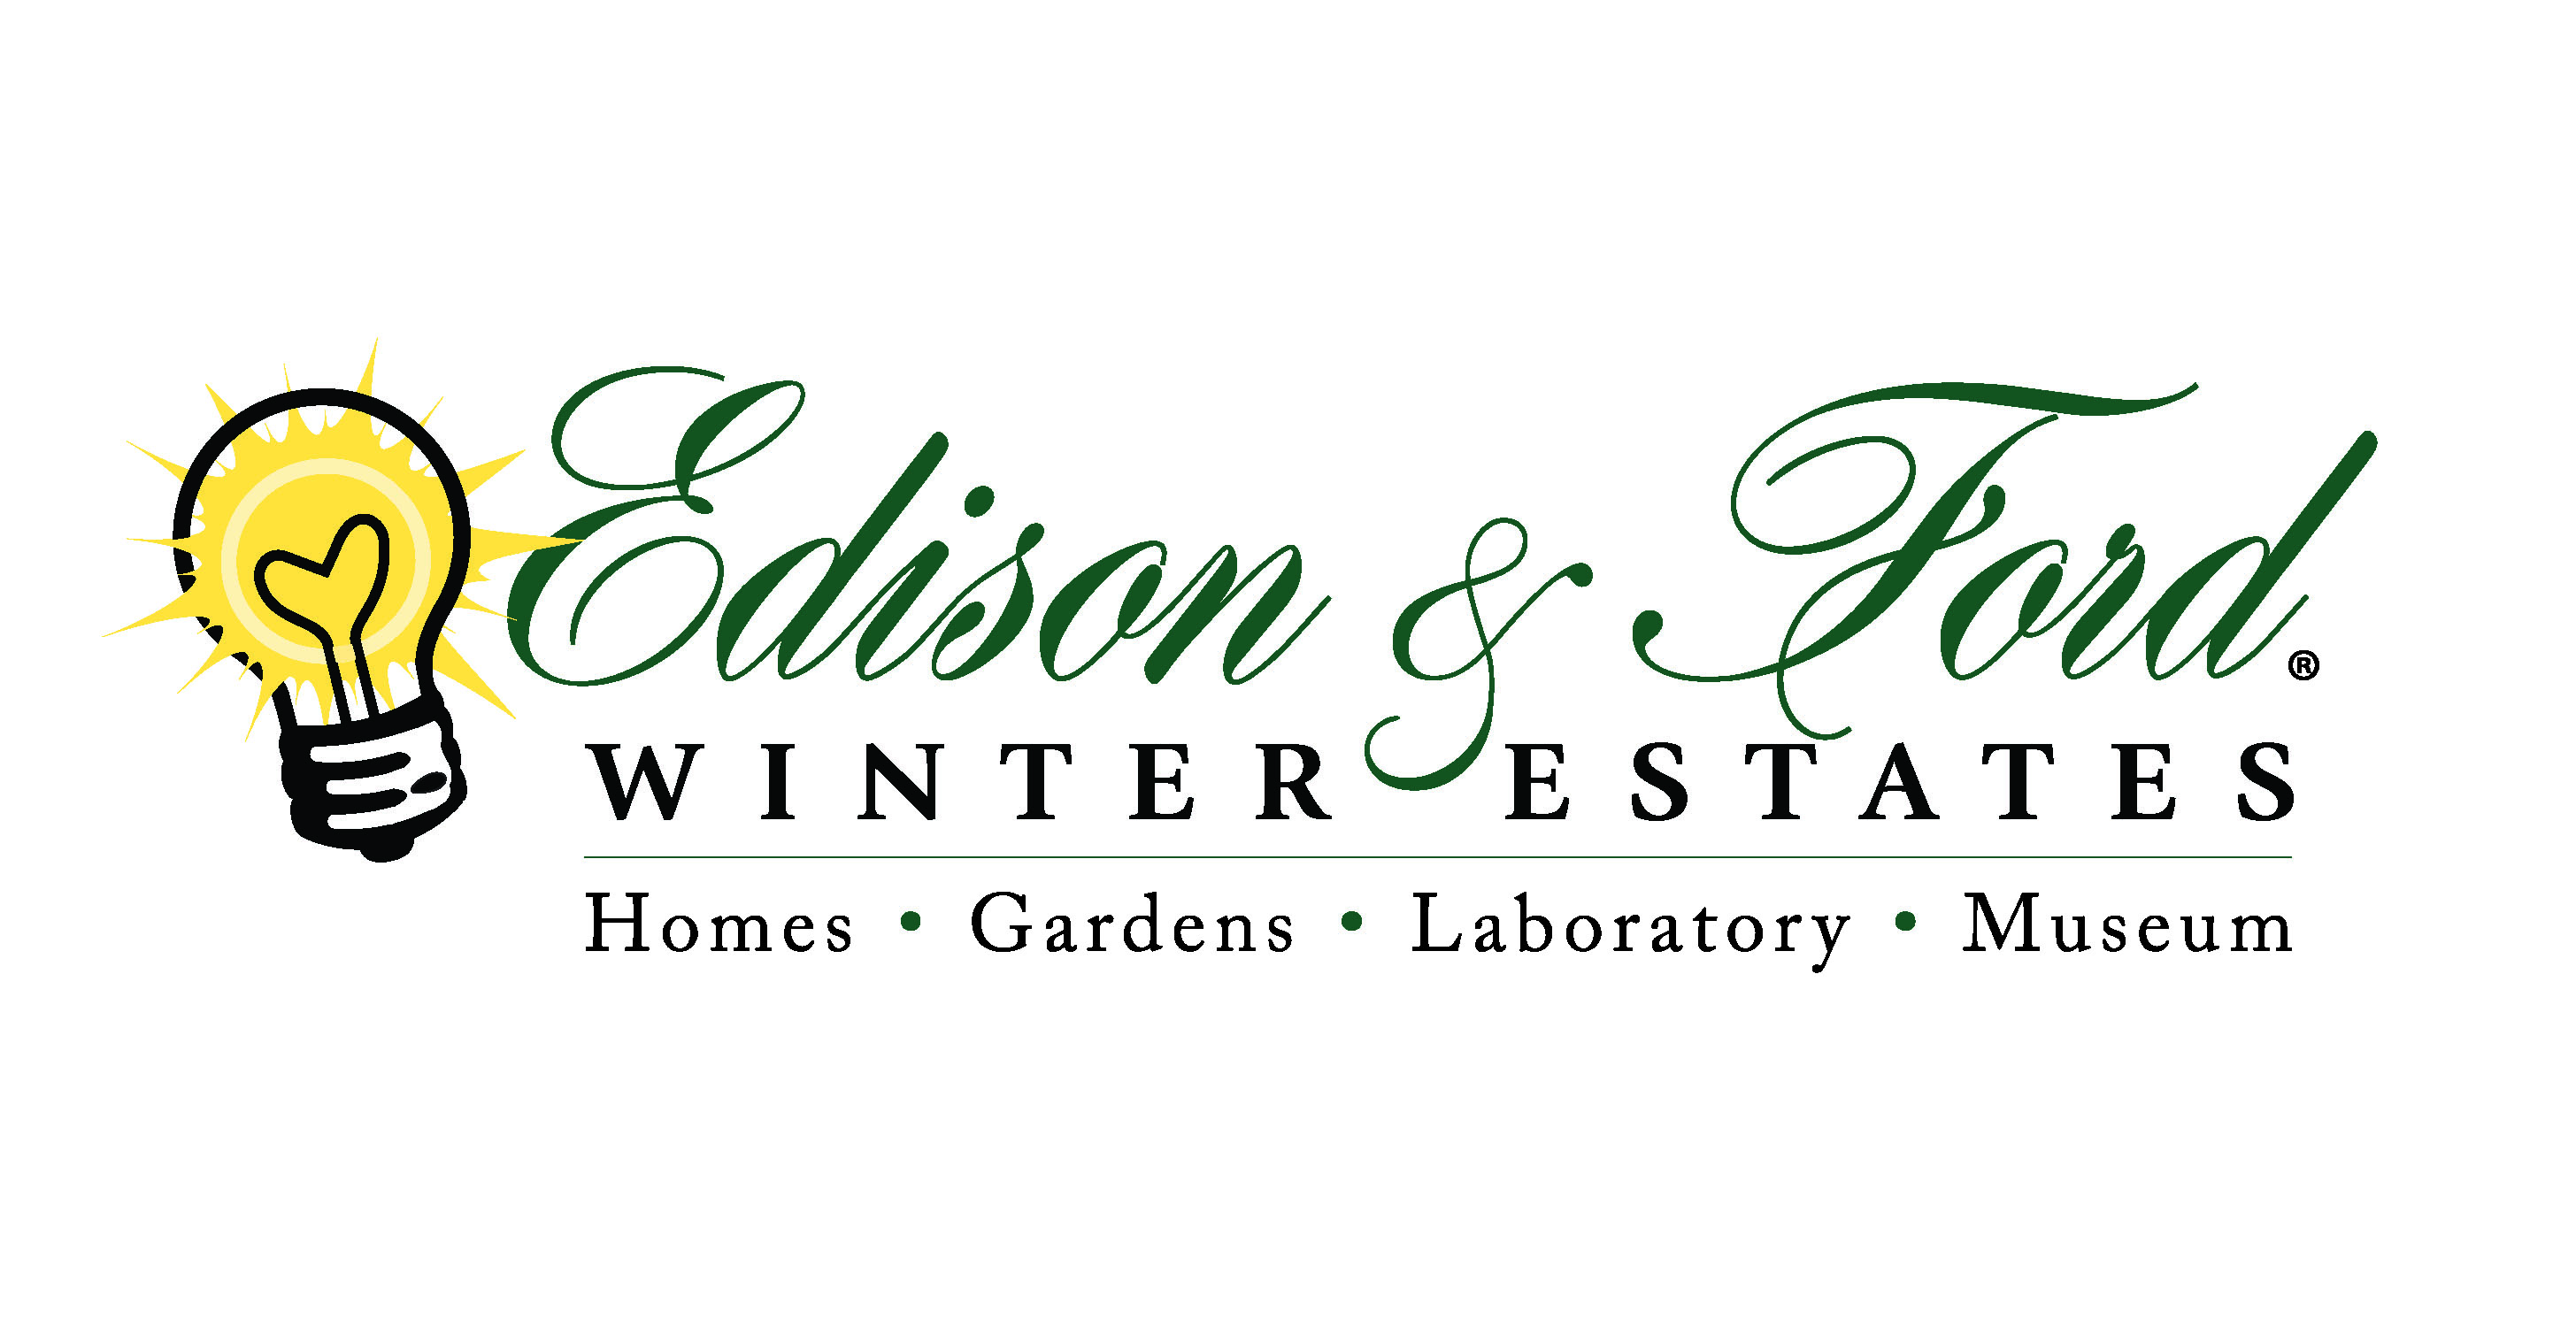 Edison & Ford Winter Estates